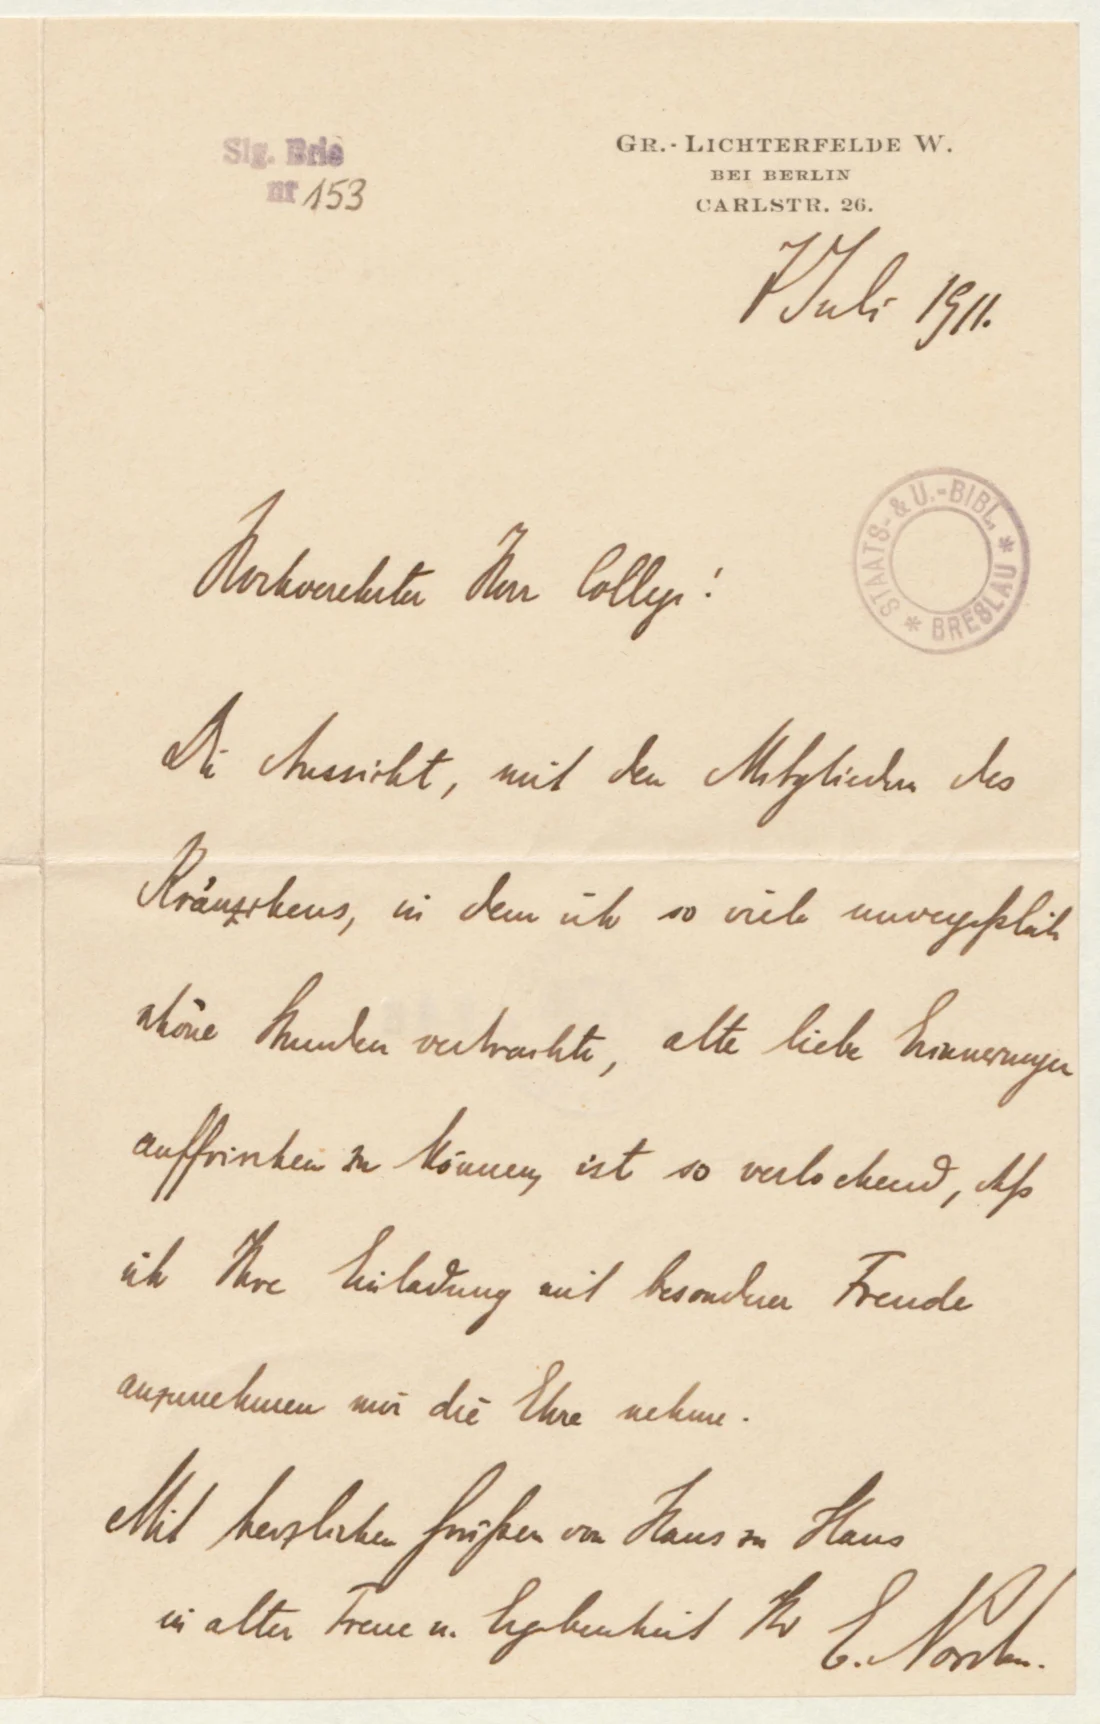 scan of a hand-written letter